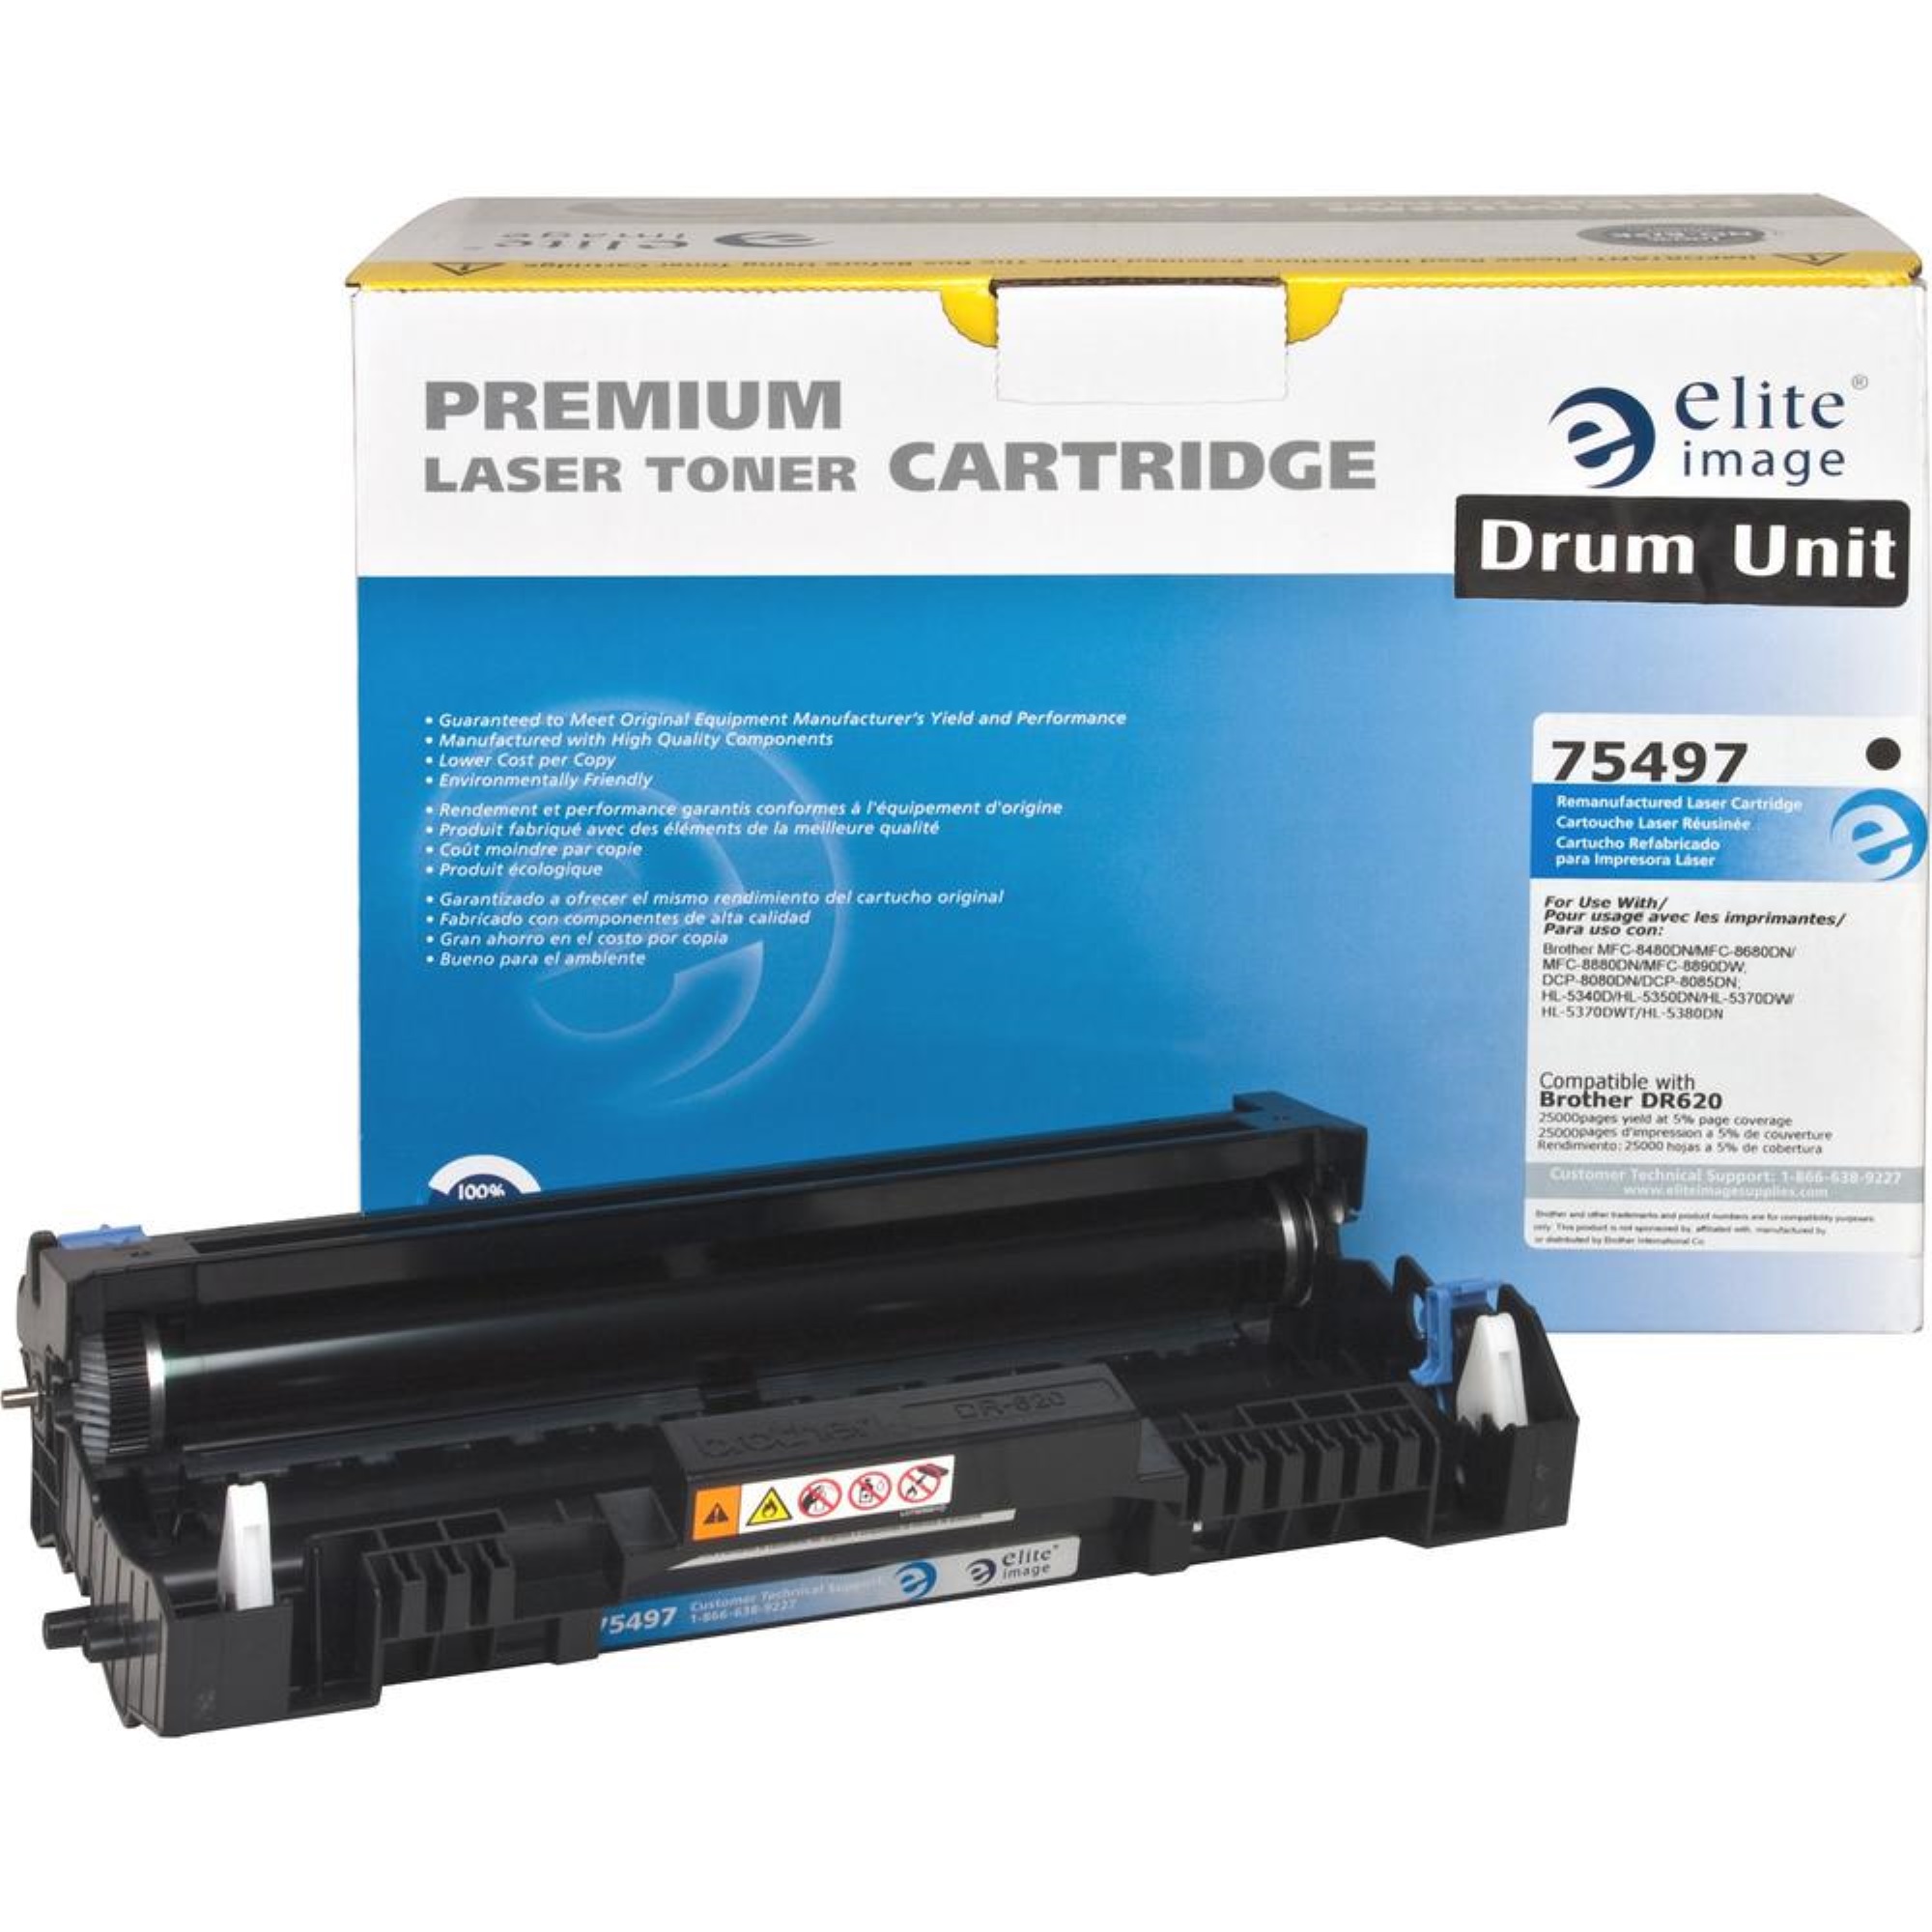 Elite Image Remanufactured Drum Cartridge Alternative For Brother DR620 - Laser Print Technology - 25000 - 1 Each